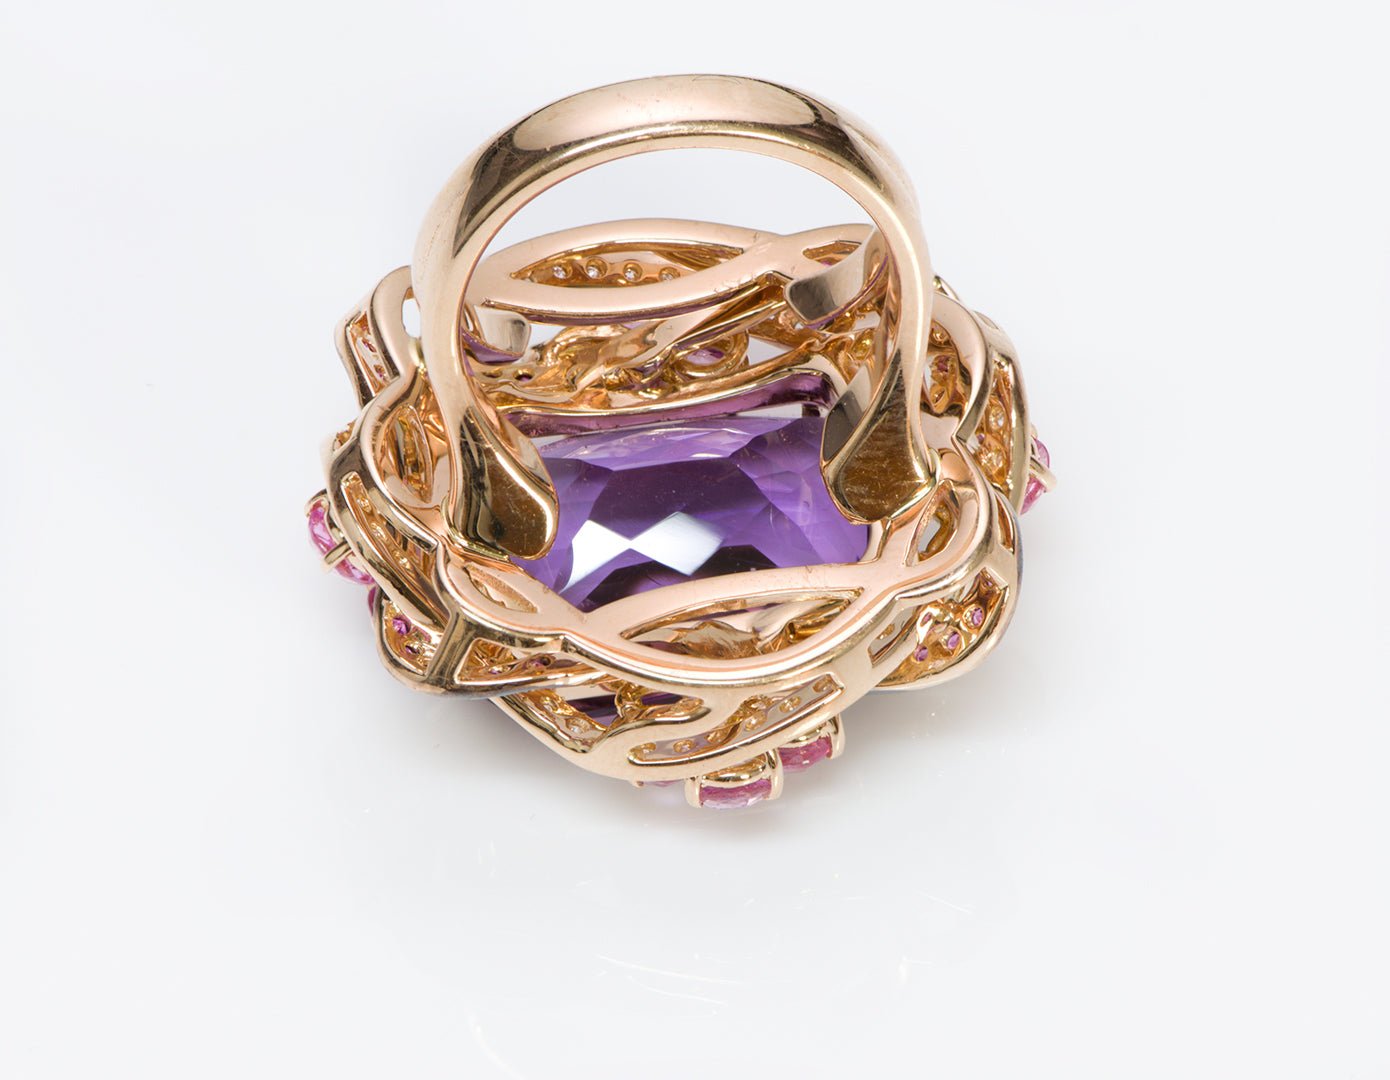 Paolo Piovan Gioielli Gold Ring Diamond Amethyst & Gemstones